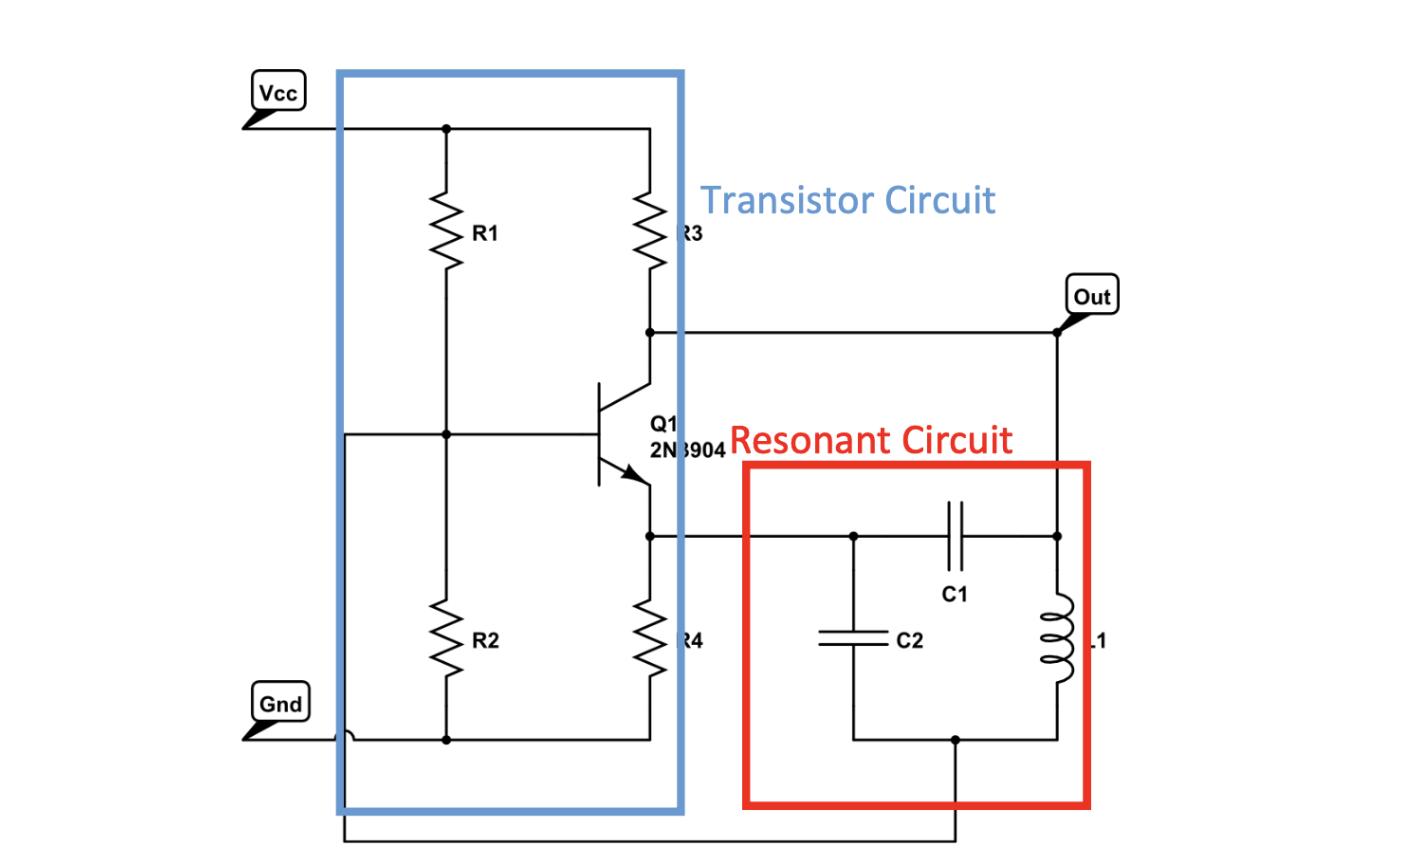 Vcc Gnd ww mm R1 R2 ww Transistor Circuit ww R3 Q1 2N 3904 Resonant Circuit 24 C2 C1 Out m